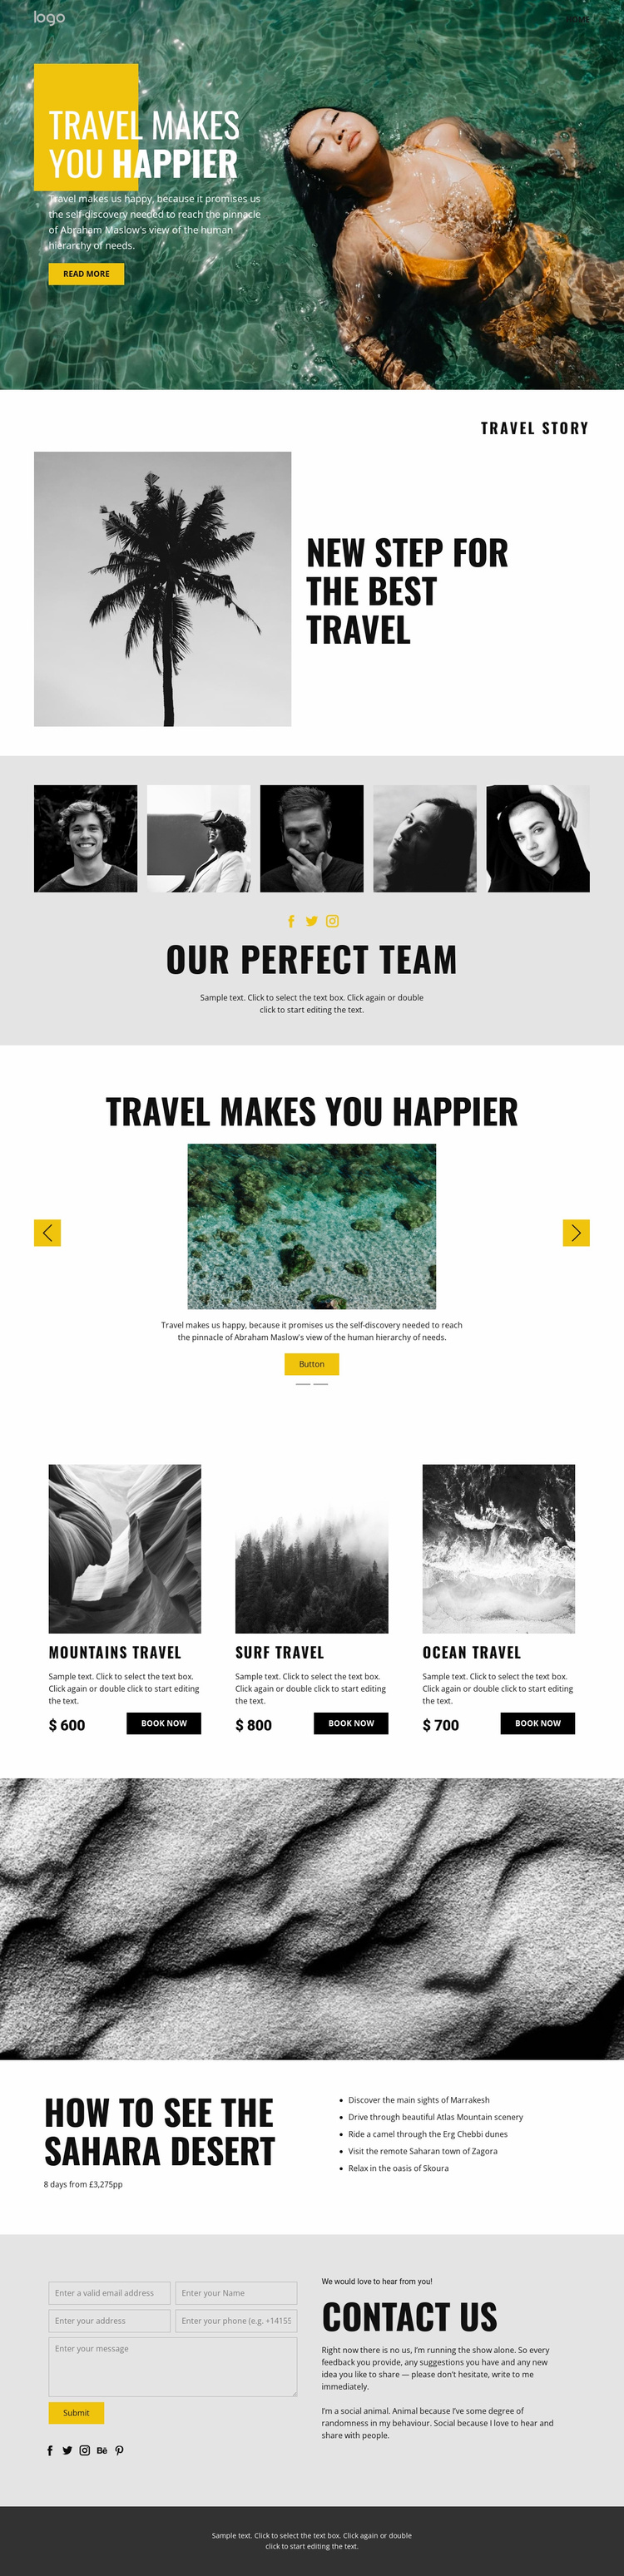 Happy people deserve travel Website Template